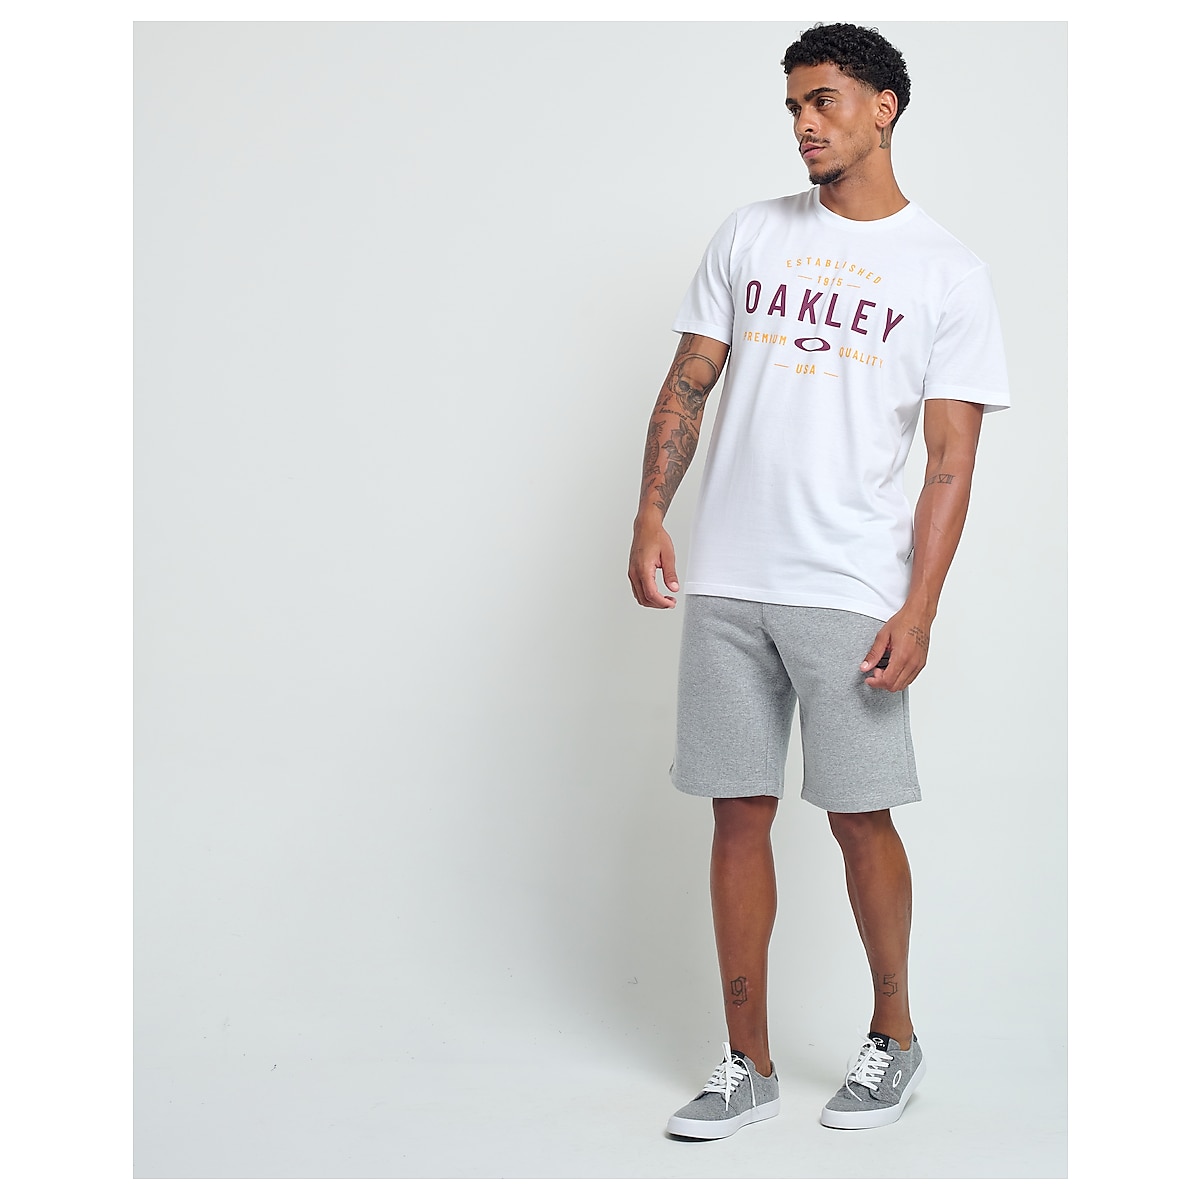 Roupas de Marcas  Camisetas, Camisas, Bermudas, Calças. - Camiseta Oakley  (P)